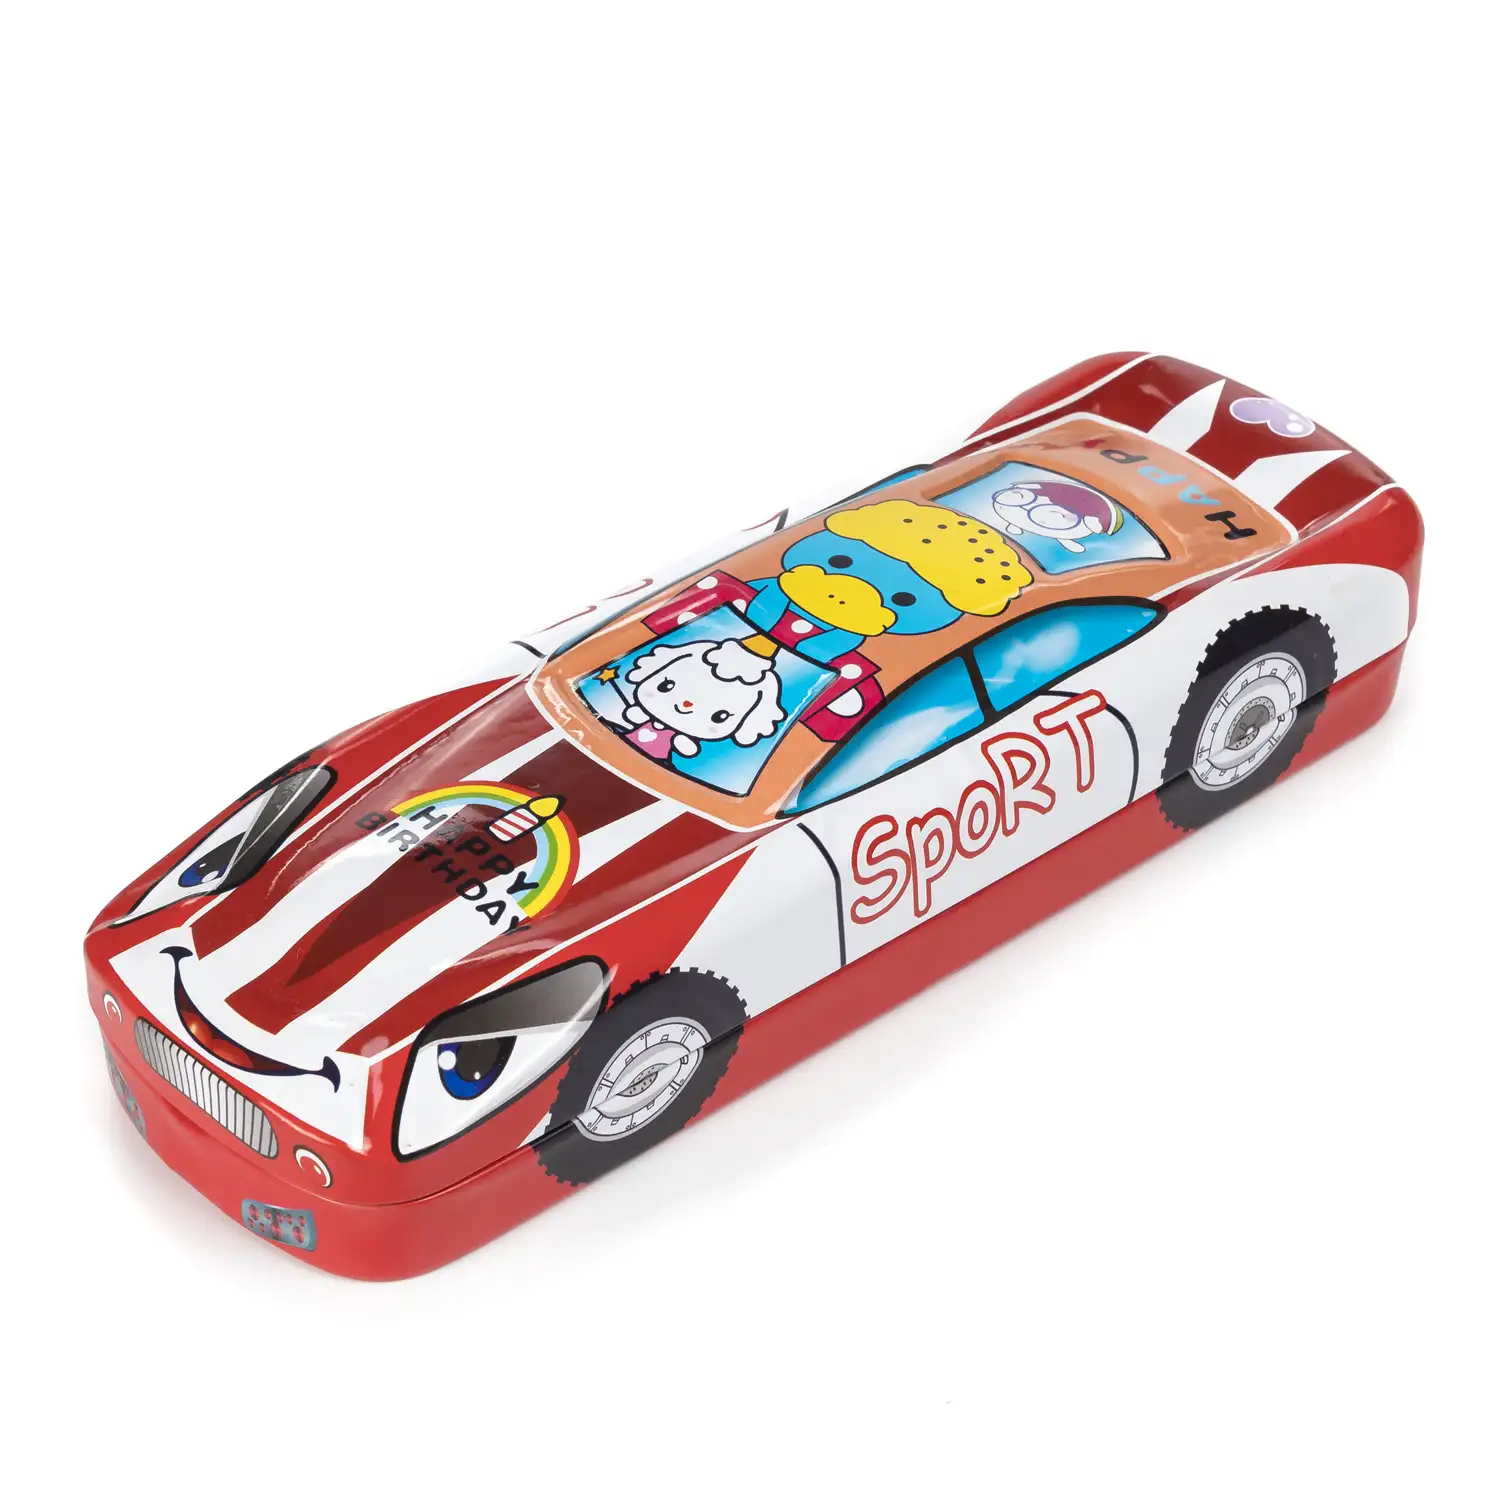 Estuche portatodo infantil metálico diseño coche de carreras 3D.